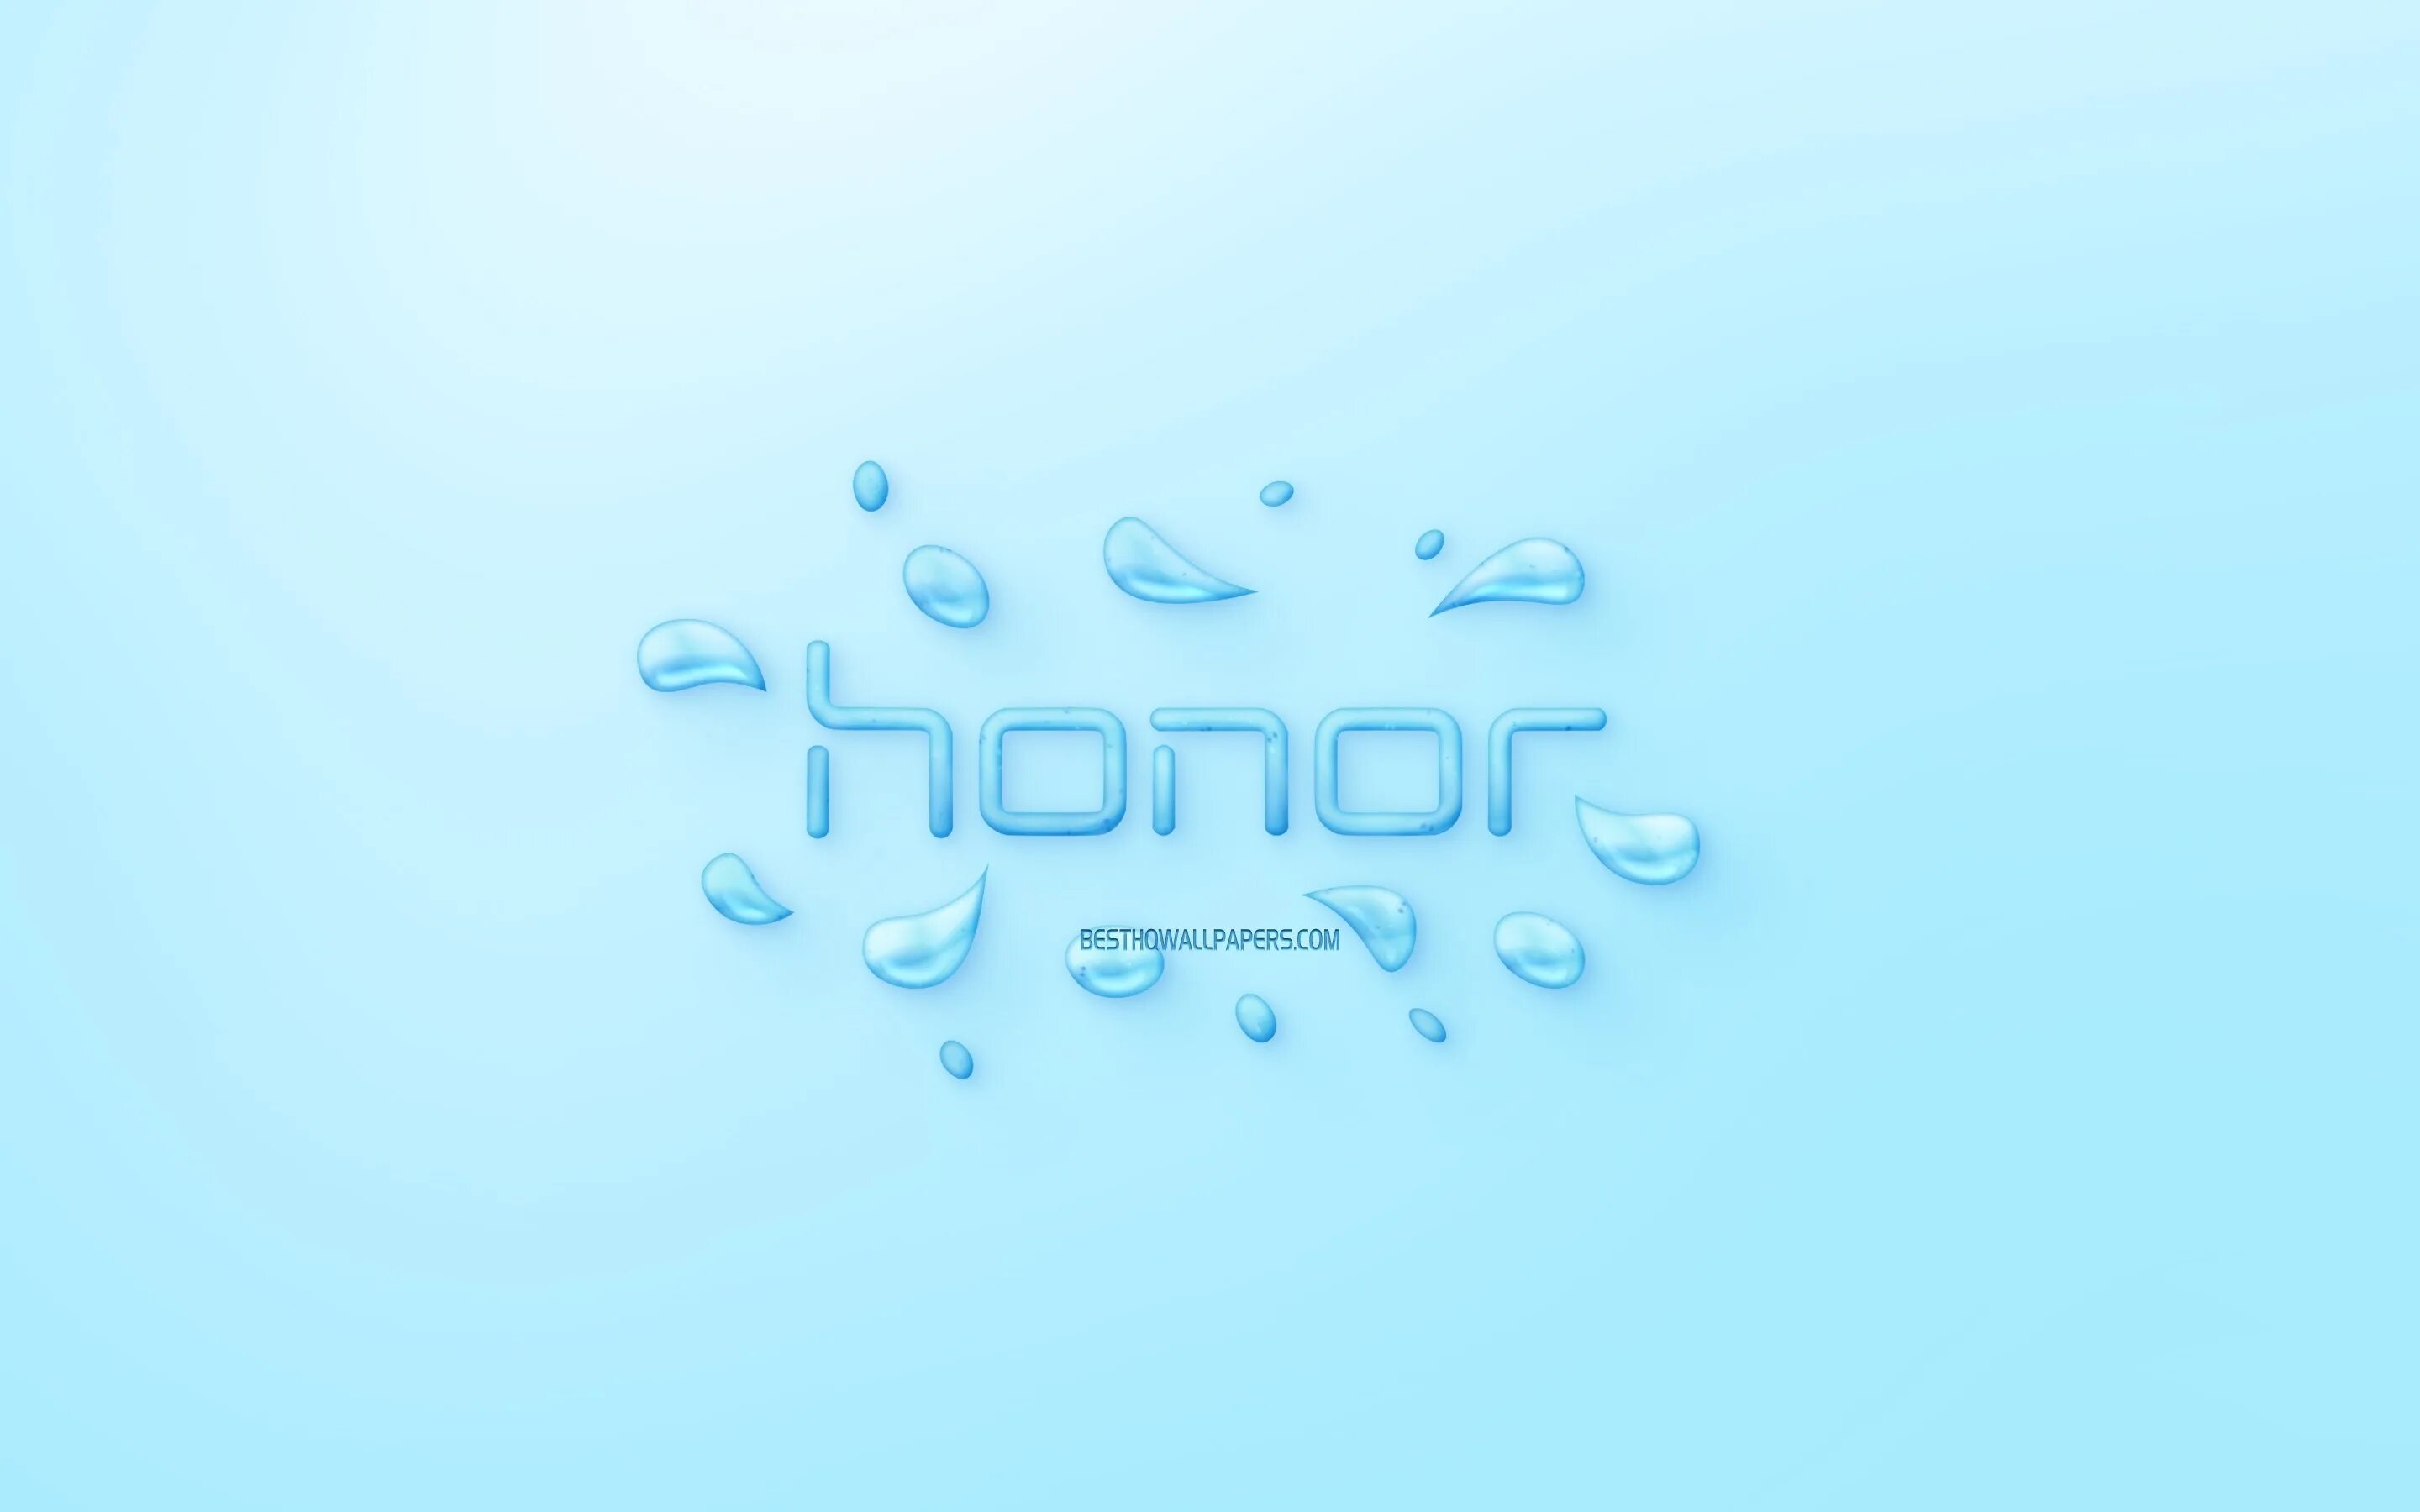 Заставка Honor. Honor логотип. Обои с логотипом Honor. Honor заставка на рабочий стол. Живые обои honor